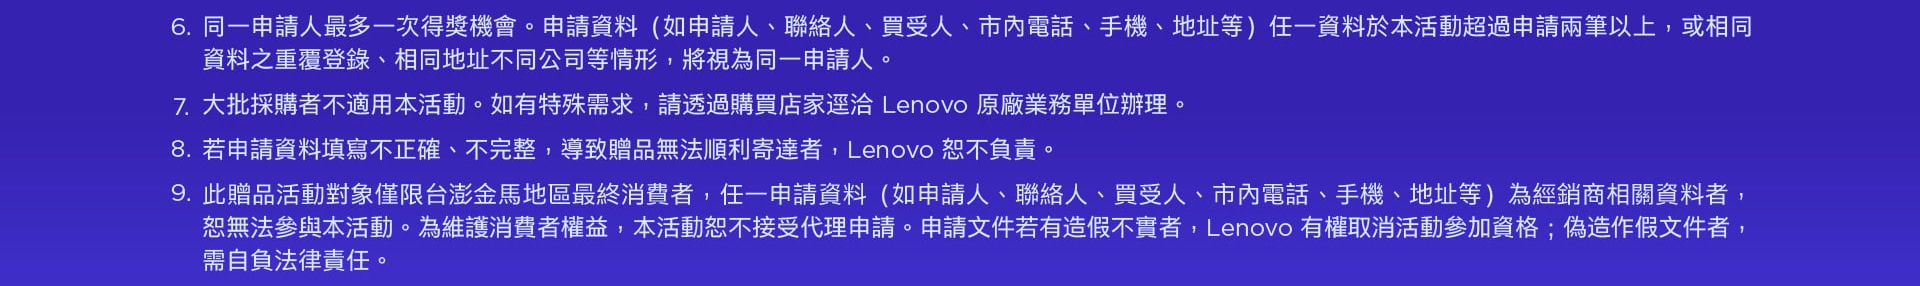 Lenovo Tab P 系列 上市禮